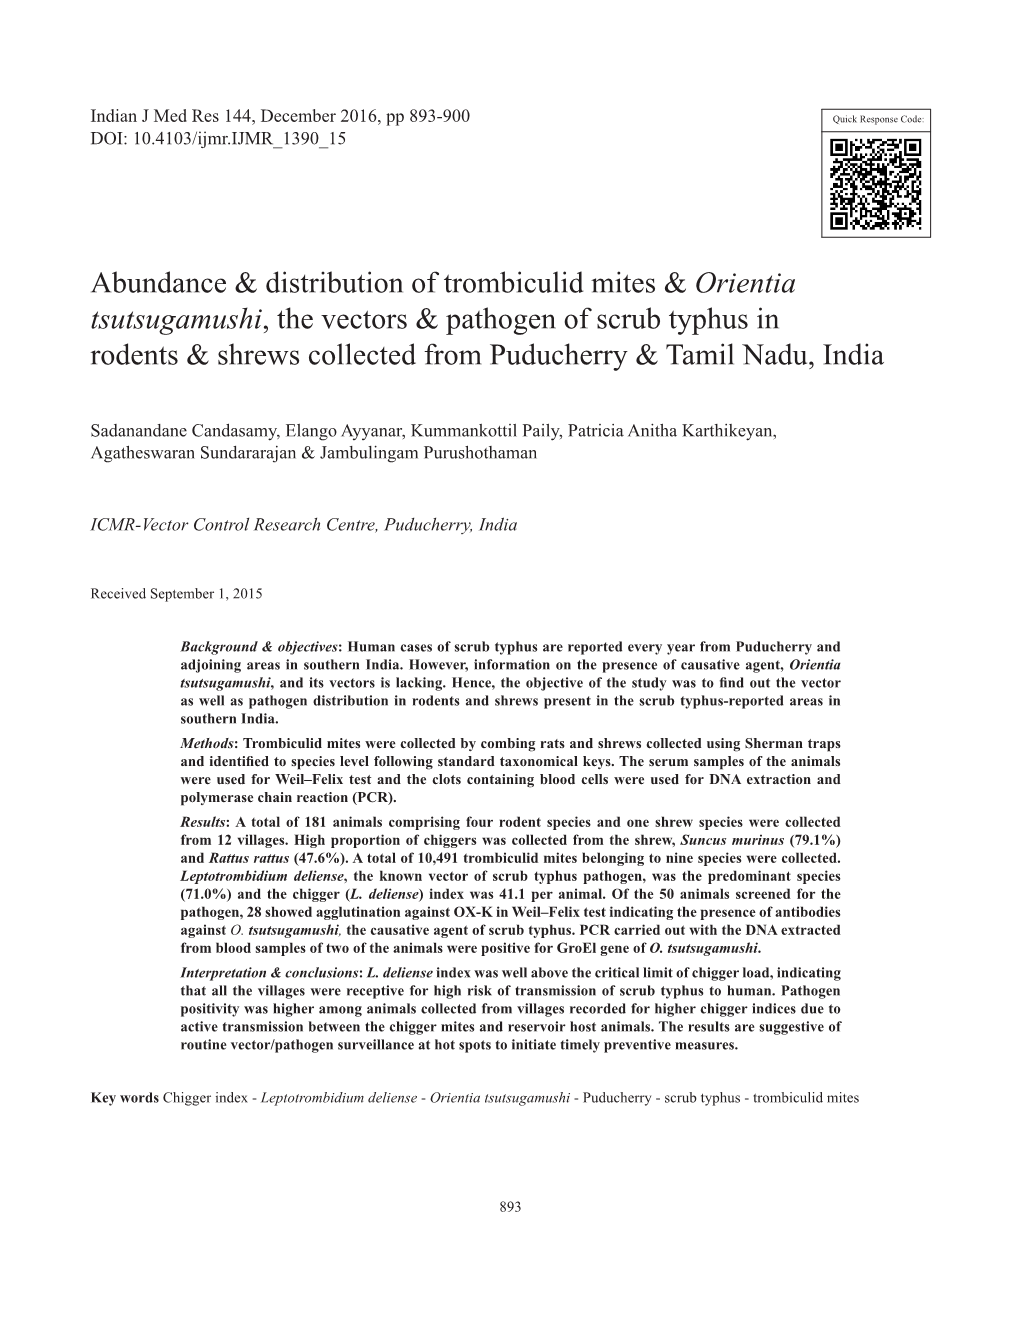 Abundance & Distribution of Trombiculid Mites & Orientia